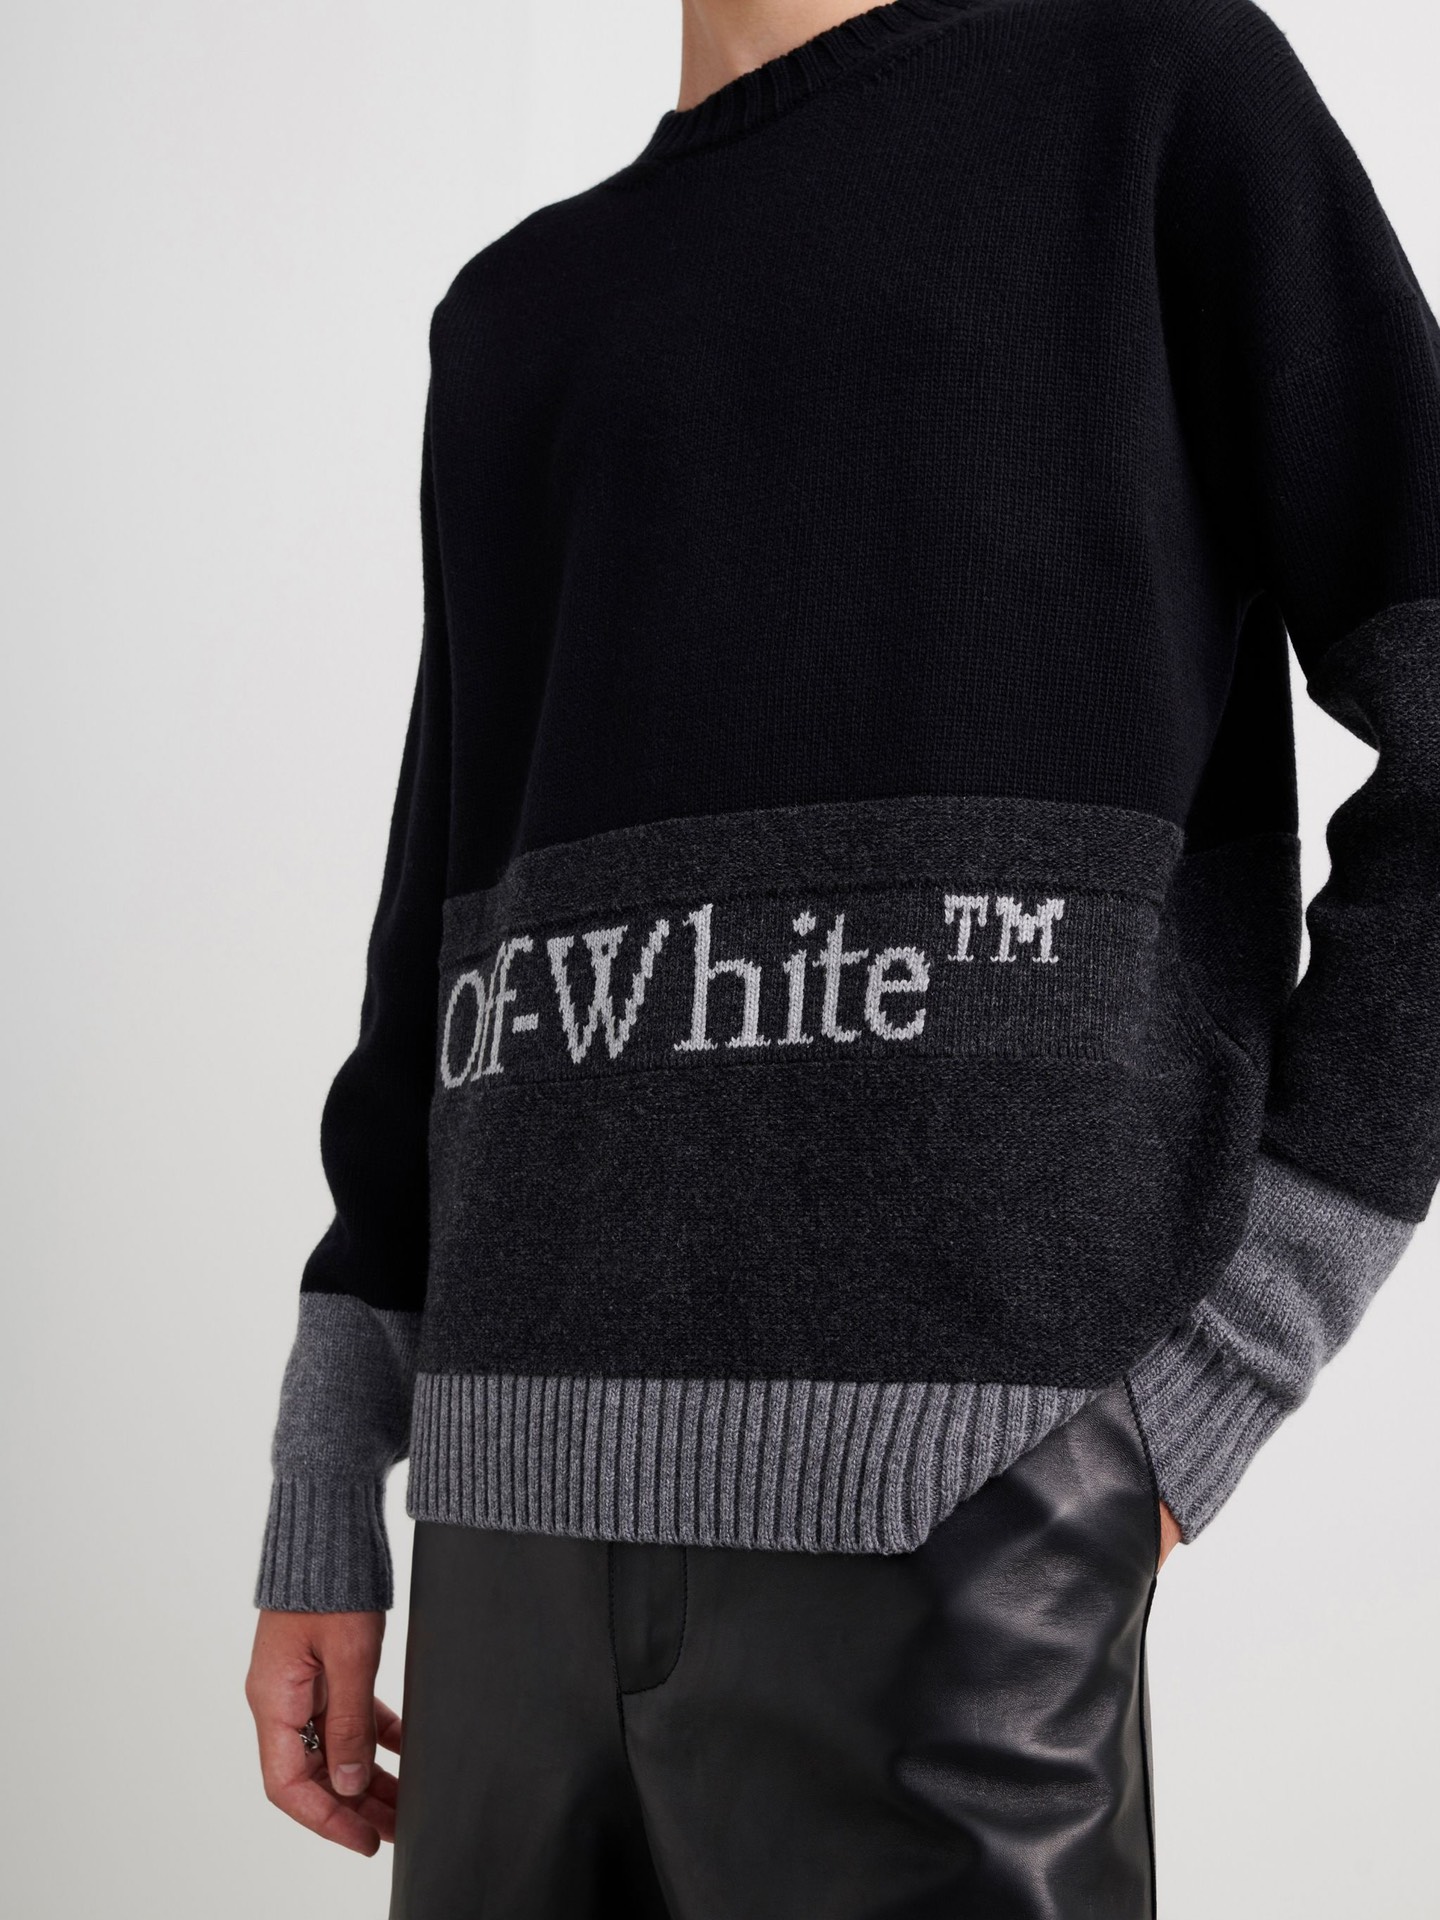 OFFWHITEオフホワイトセーター激安通販 暖かい 冬服 トップス セーター ニット 人気新作 ブラック_8